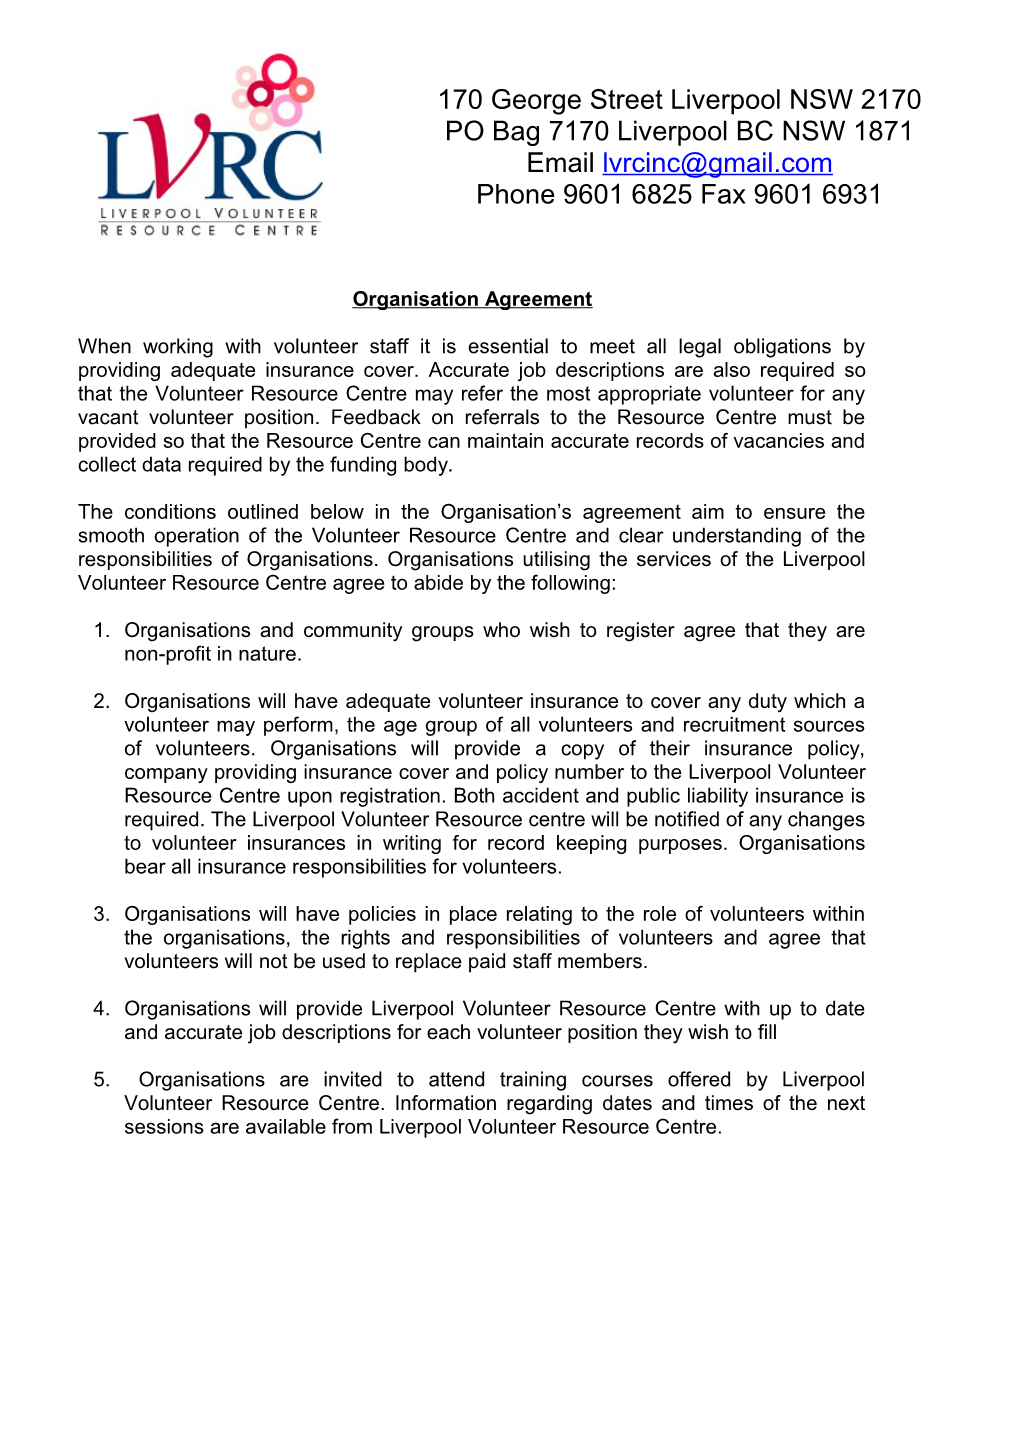 Organisation Agreement